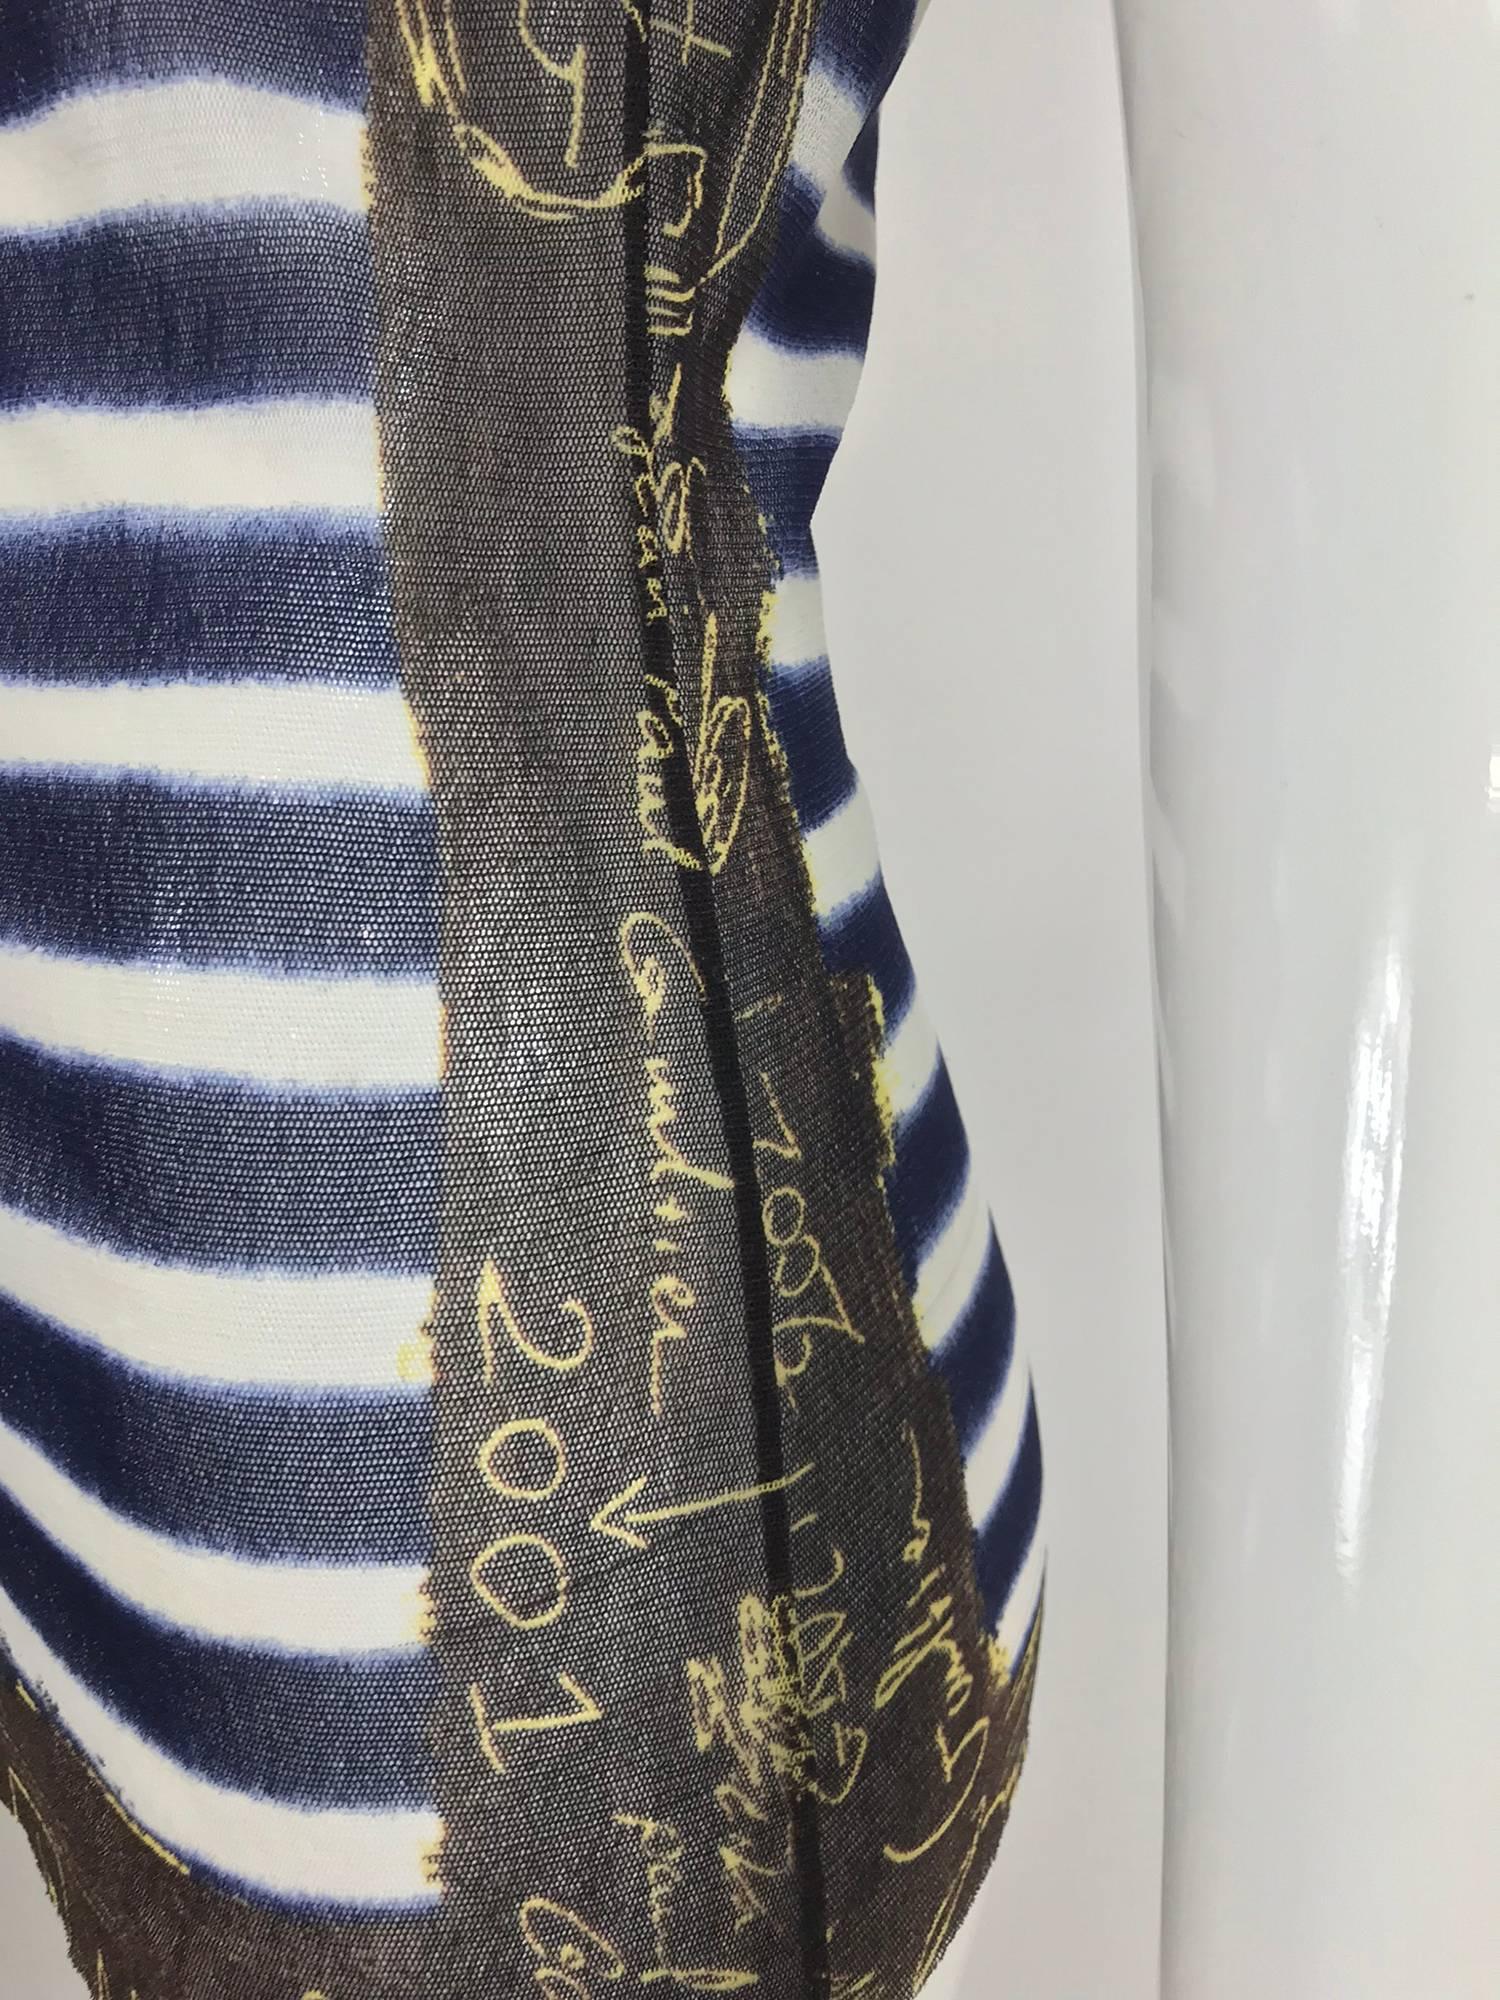 Jean Paul Gaultier signed nautical stripe mesh tank top dated 2001-02 8